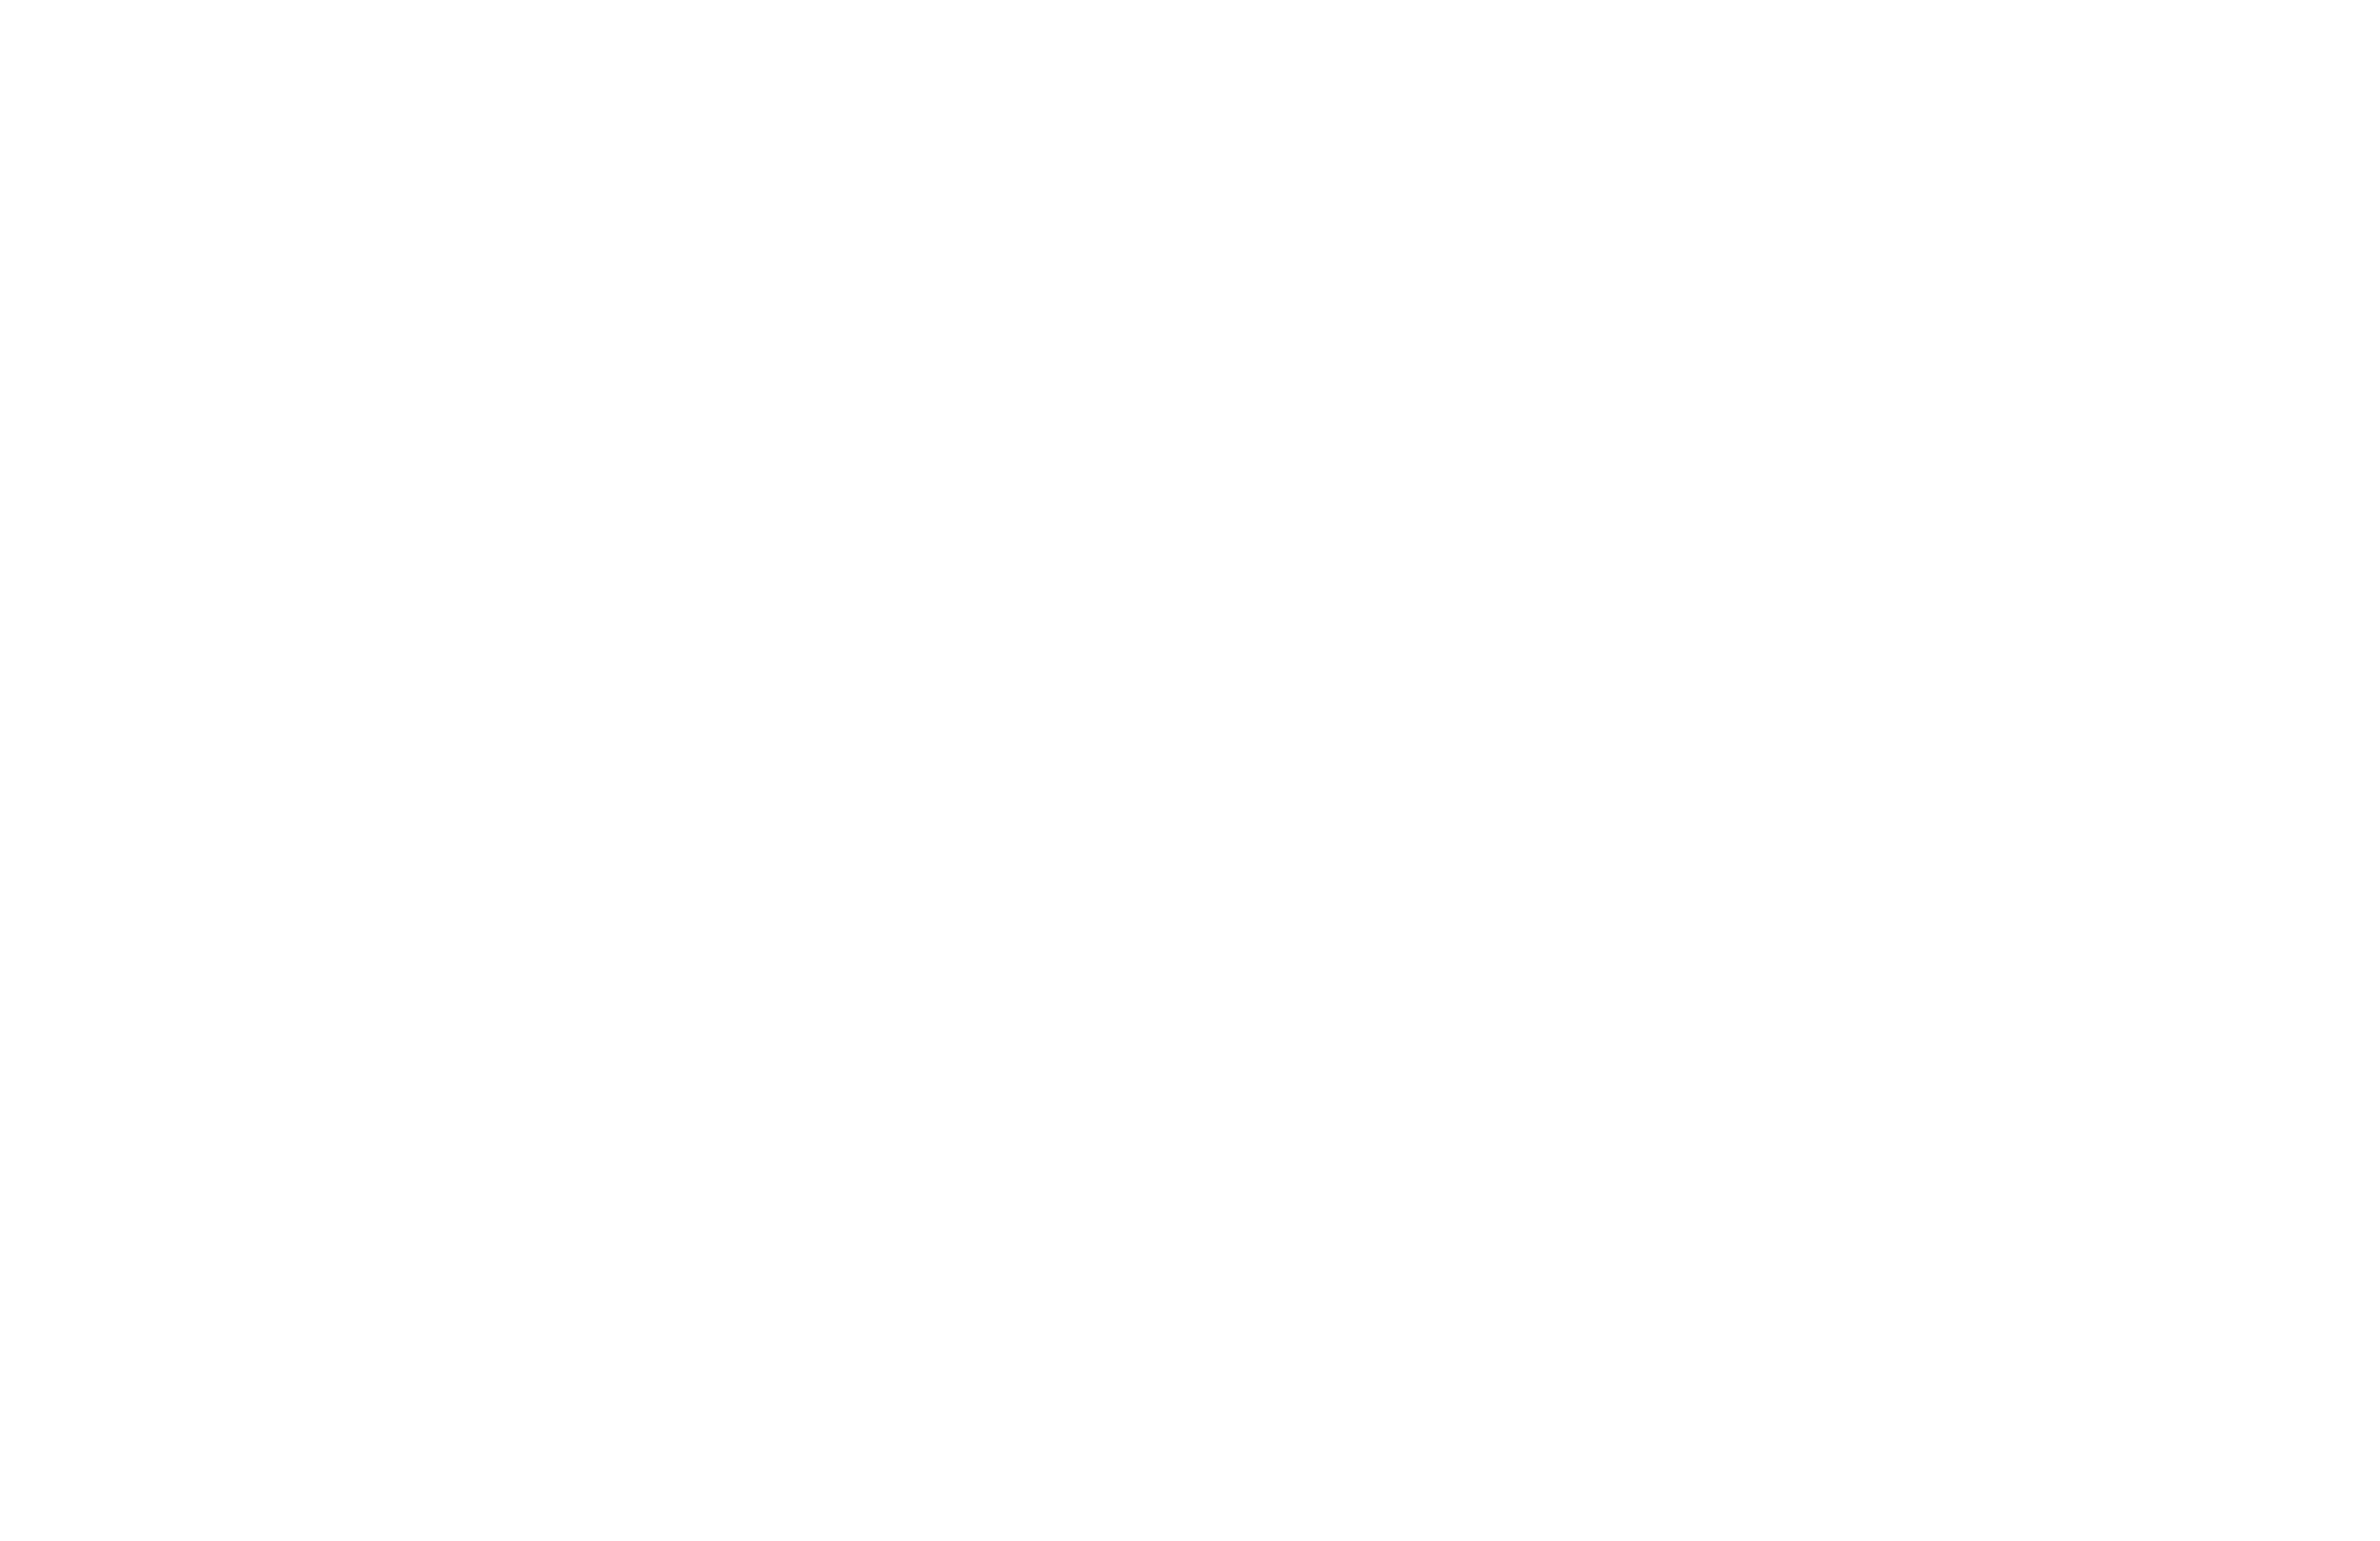 Motoclub Ernee